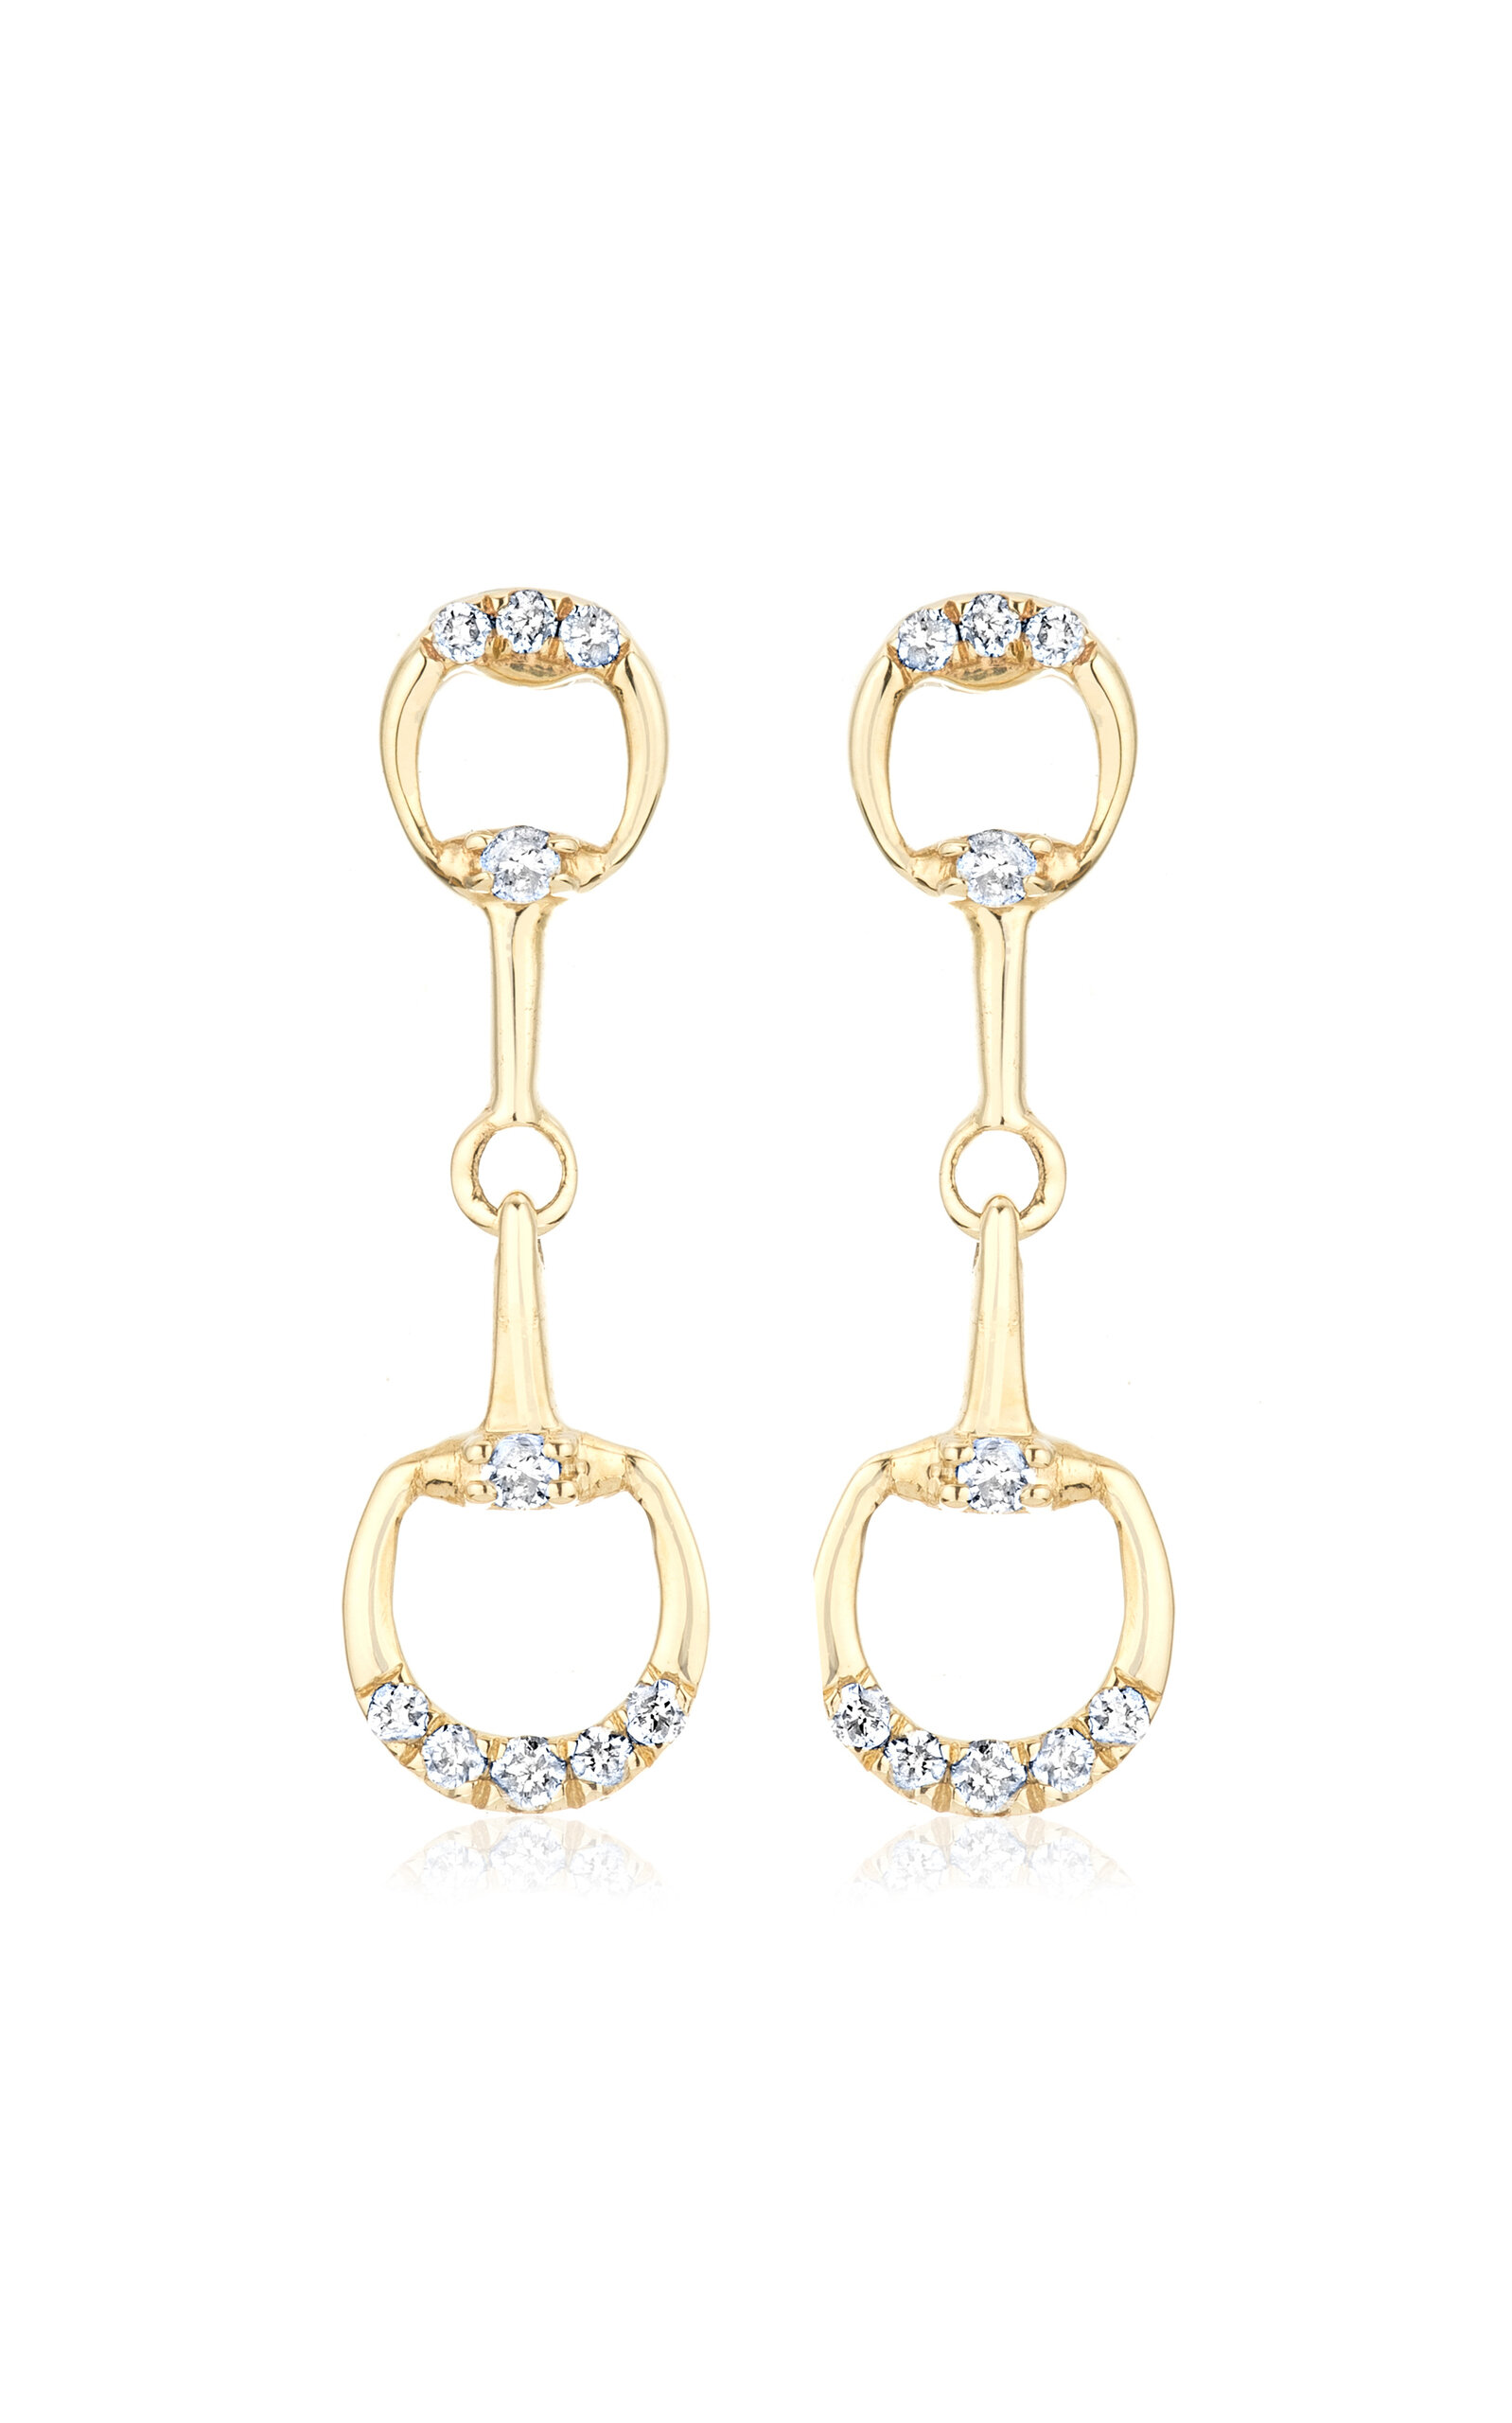 Adina Reyter Horsebit 14k Yellow Gold Diamond Earrings